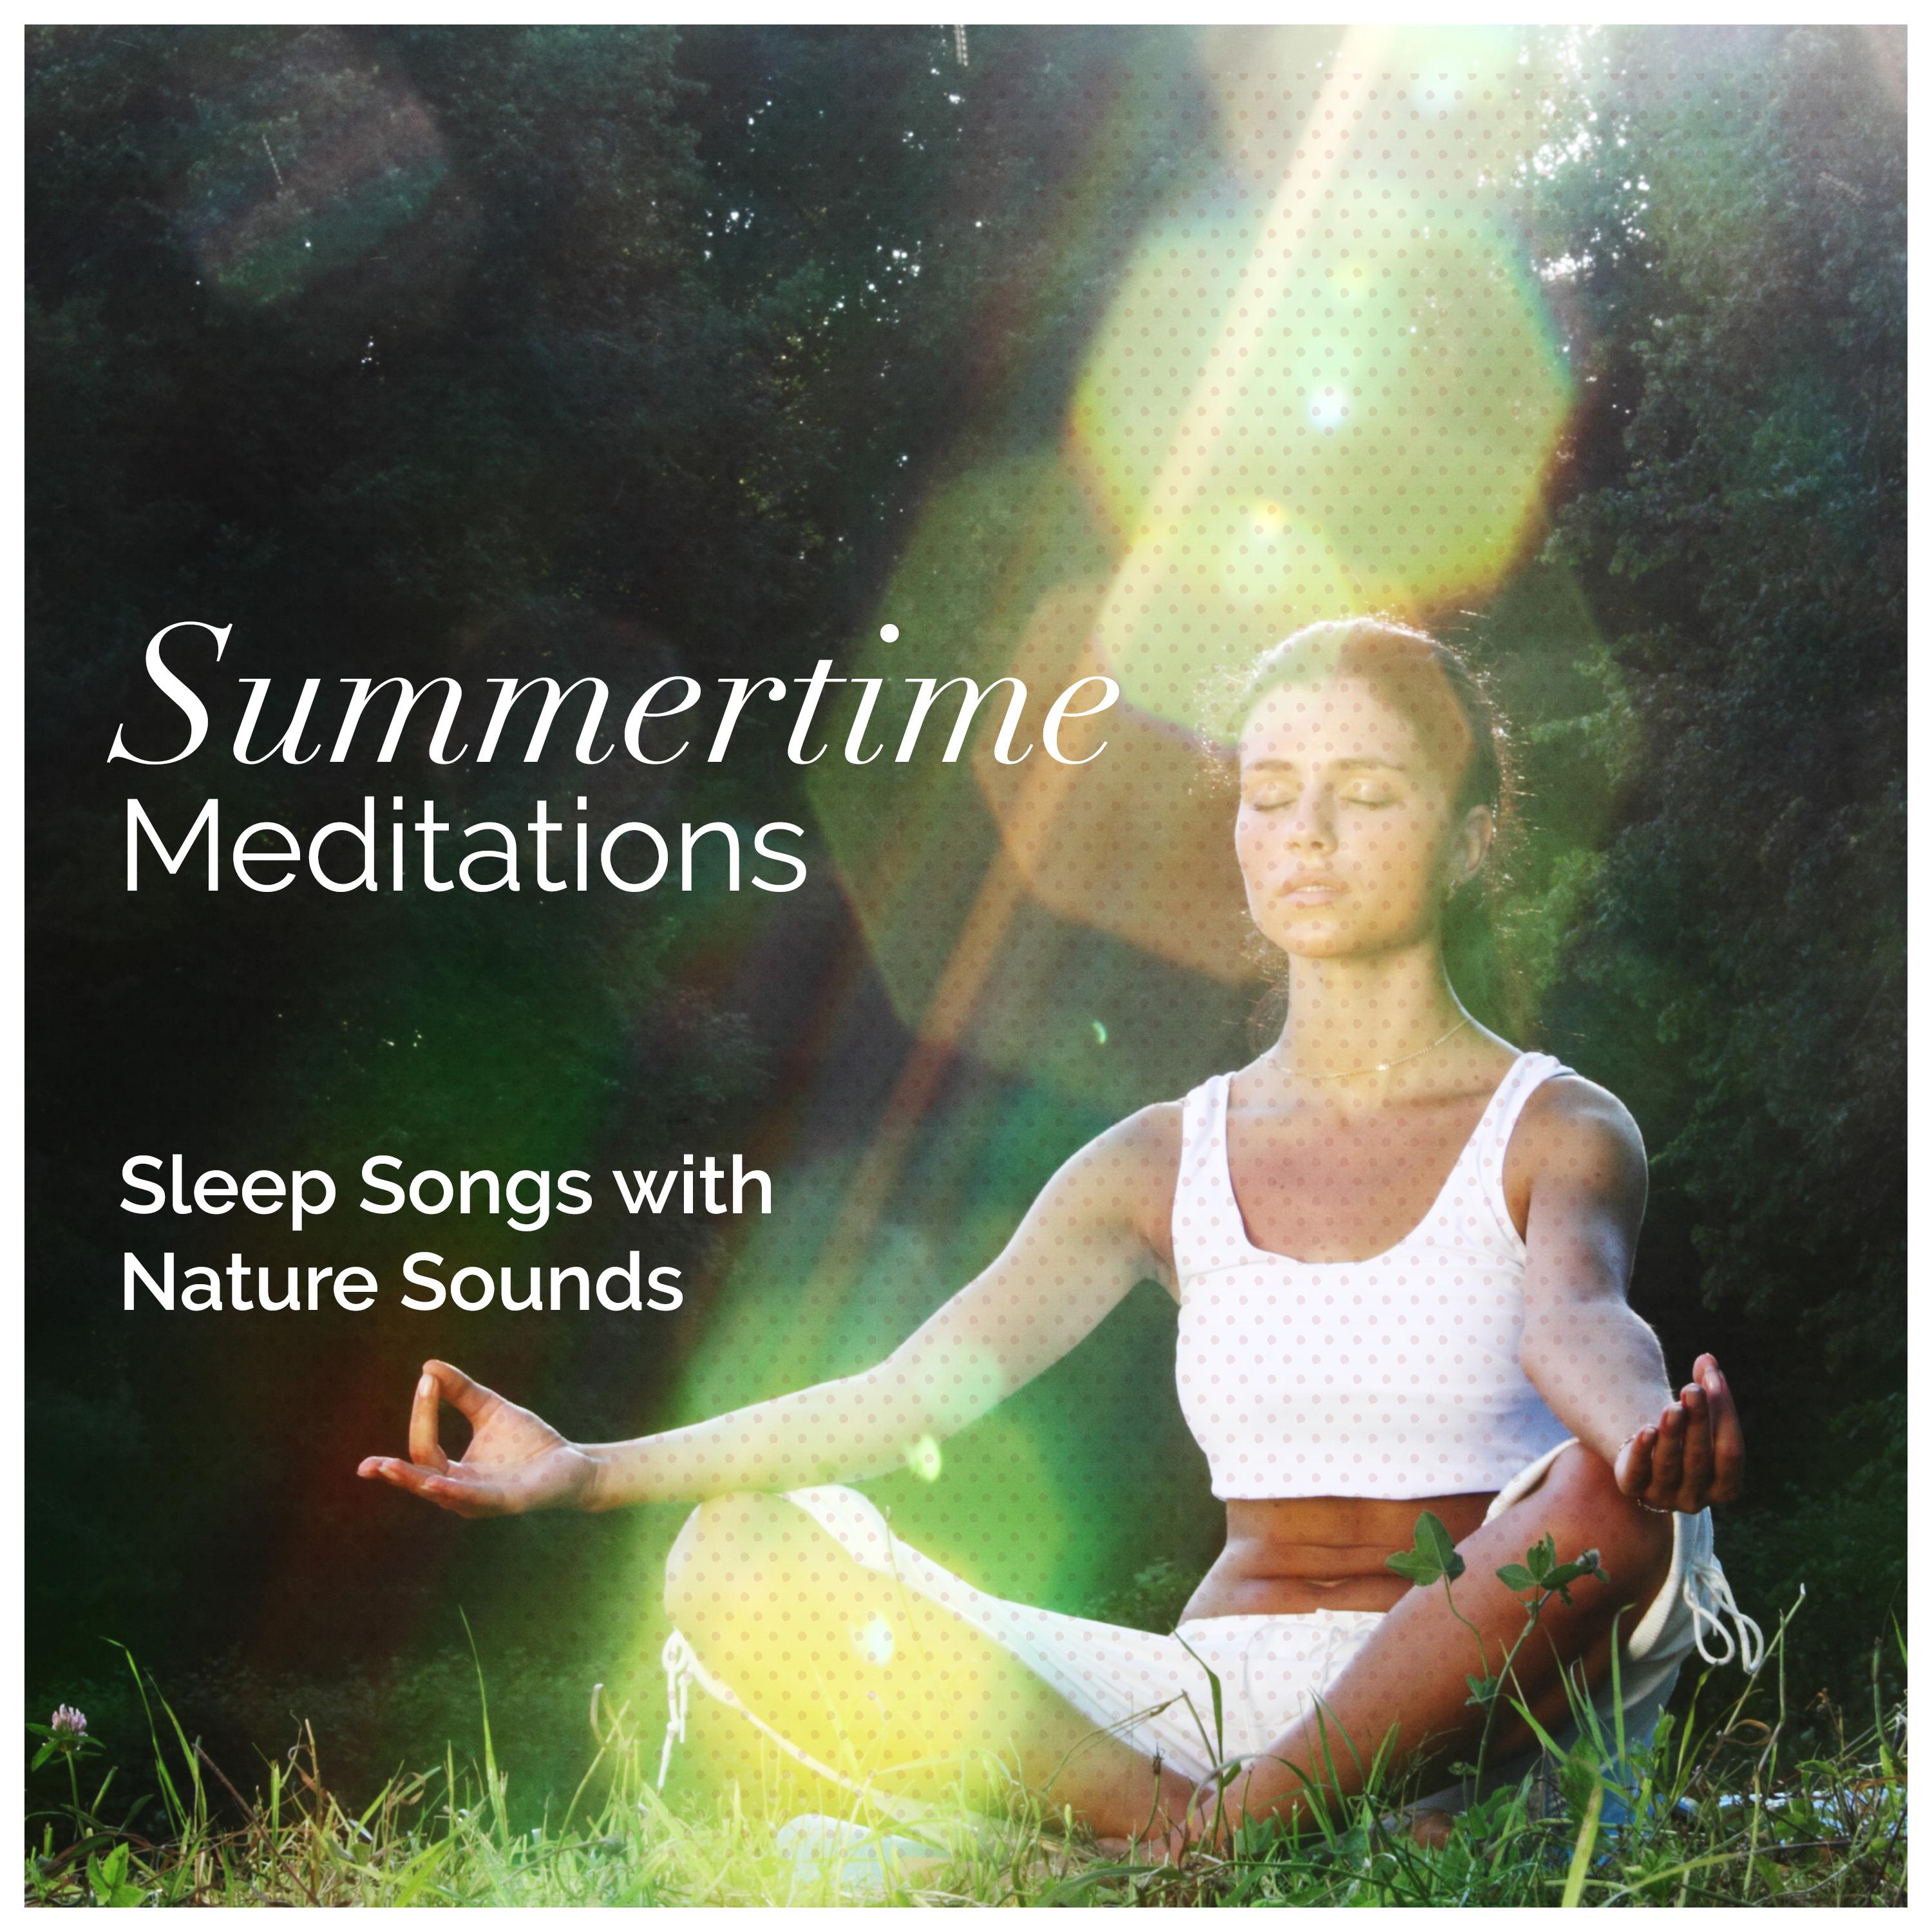 Summertime Meditations